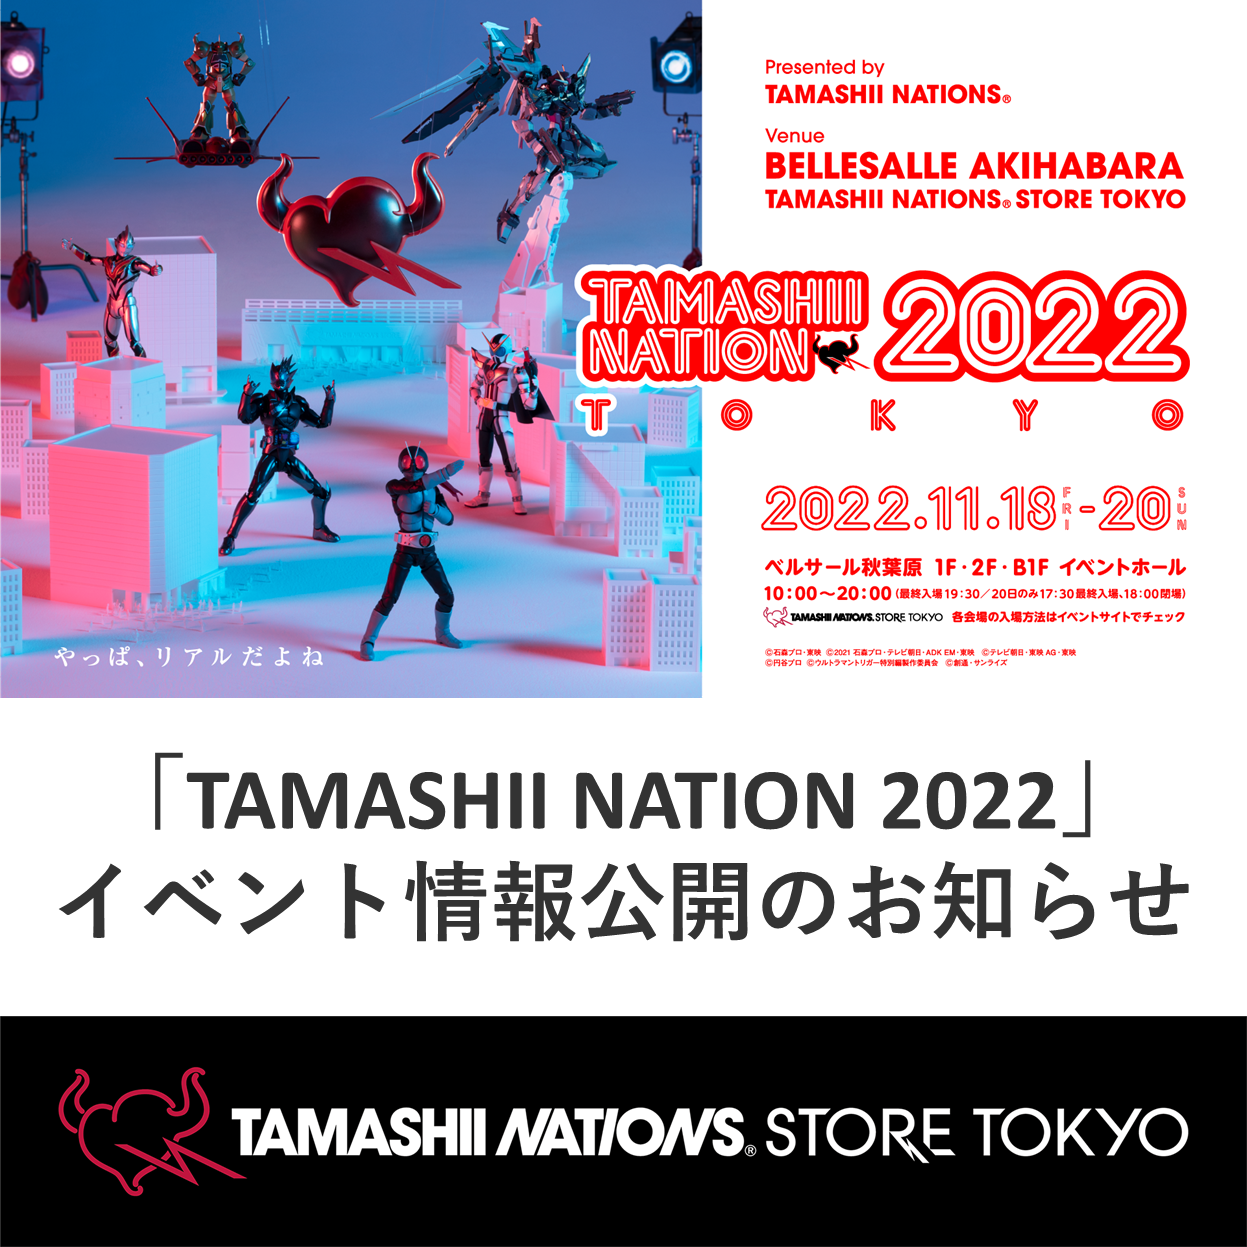 Event [TAMASHII STORE] "TAMASHII NATION 2022" event information release notice!